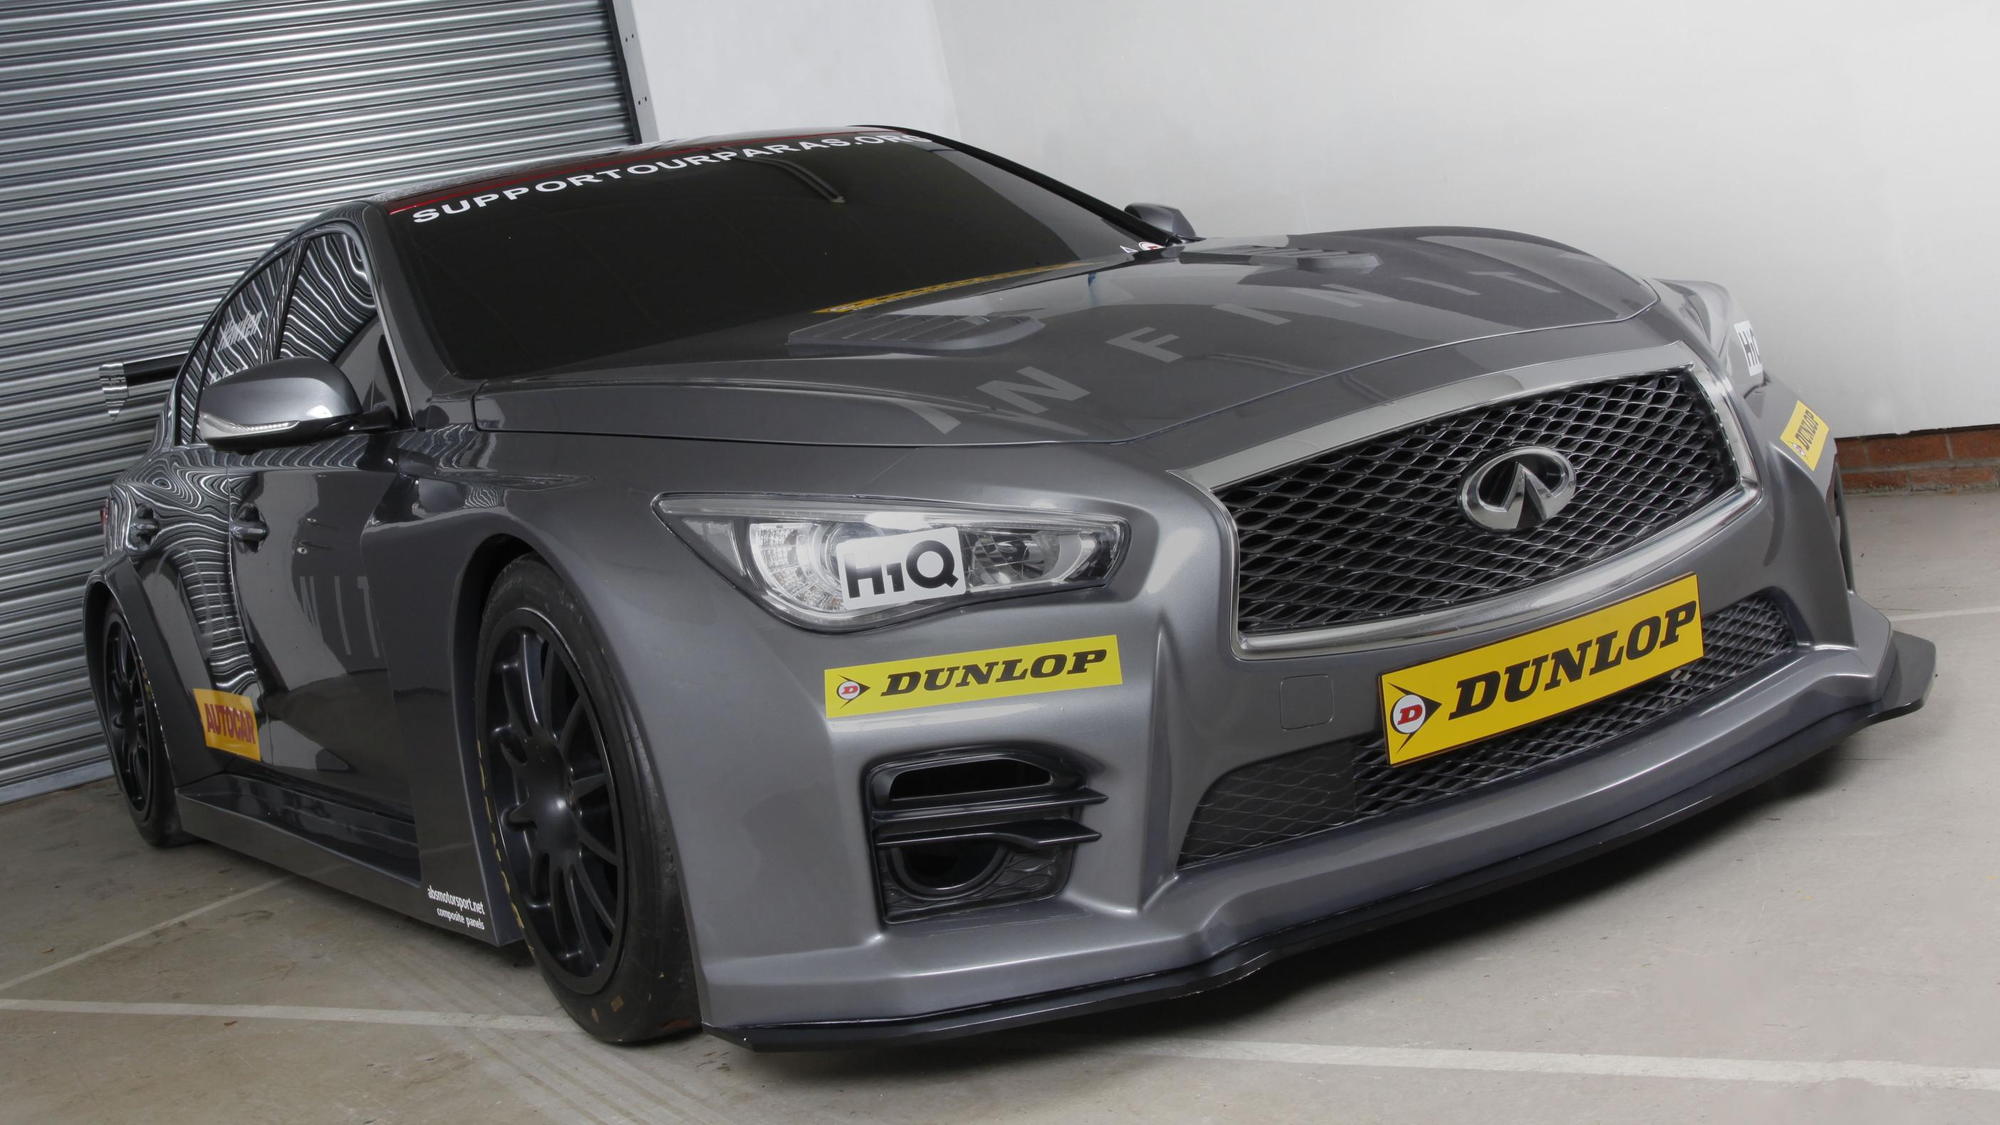 Infiniti Support Our Paras Racing Q50 race car for 2015 BTCC